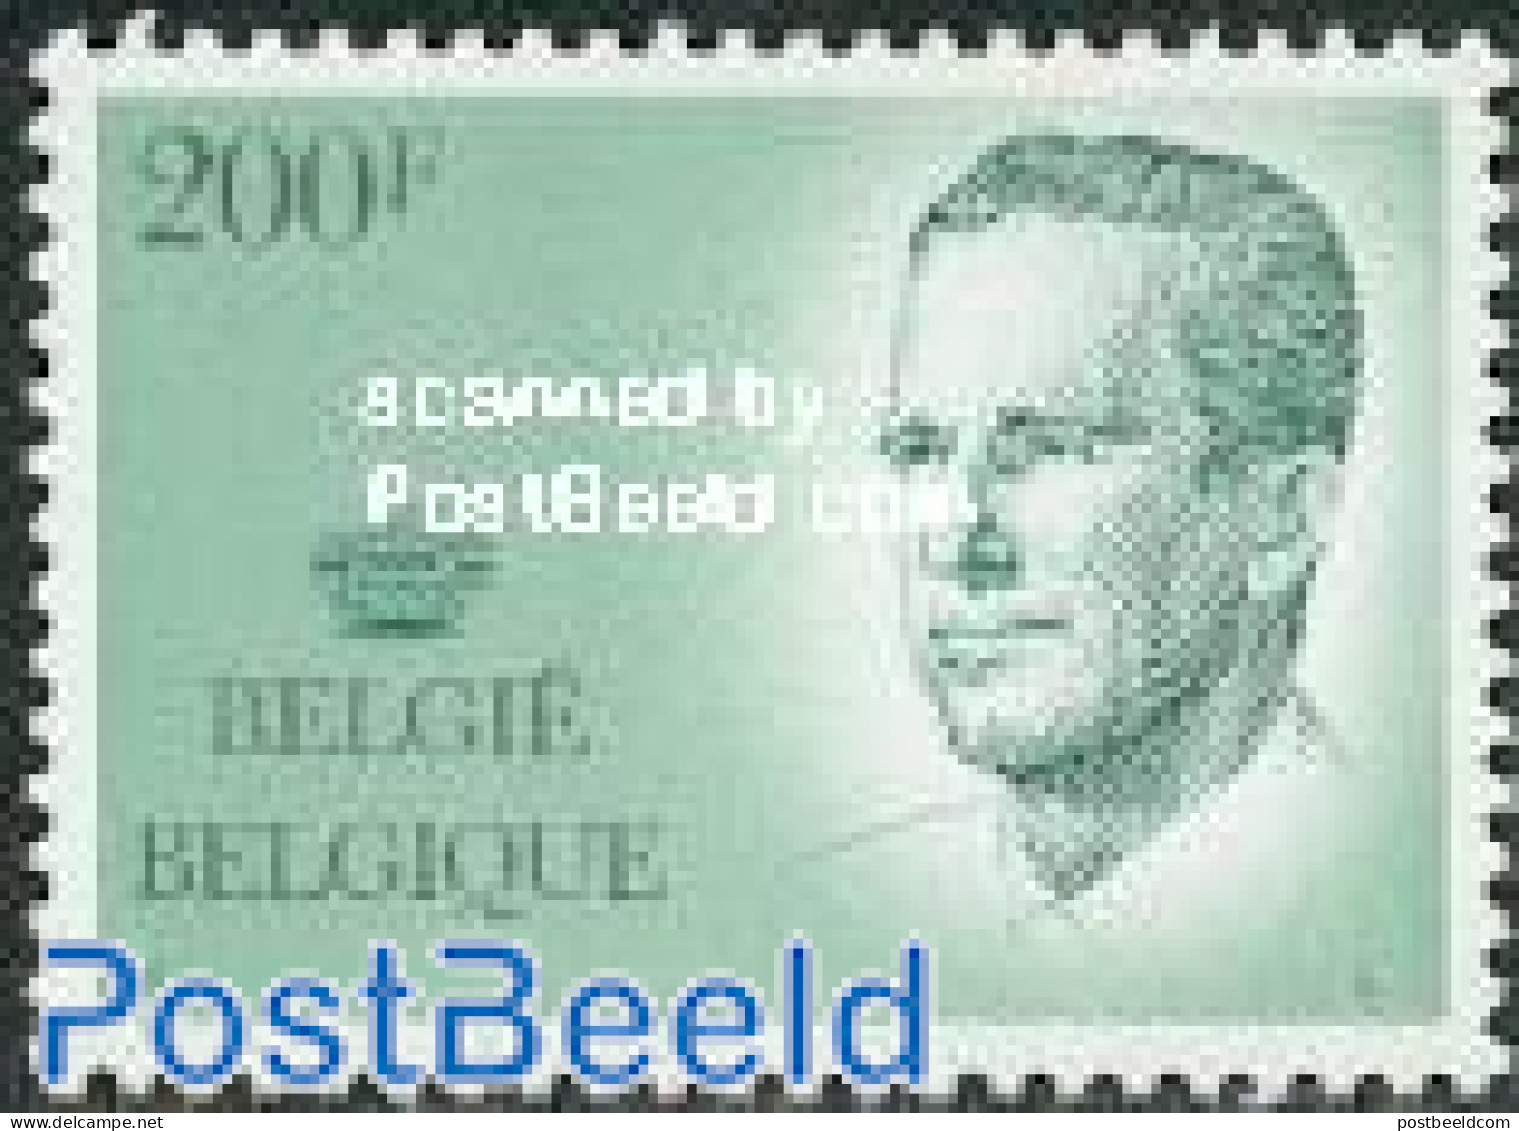 Belgium 1986 Definitive 1v, Mint NH - Unused Stamps